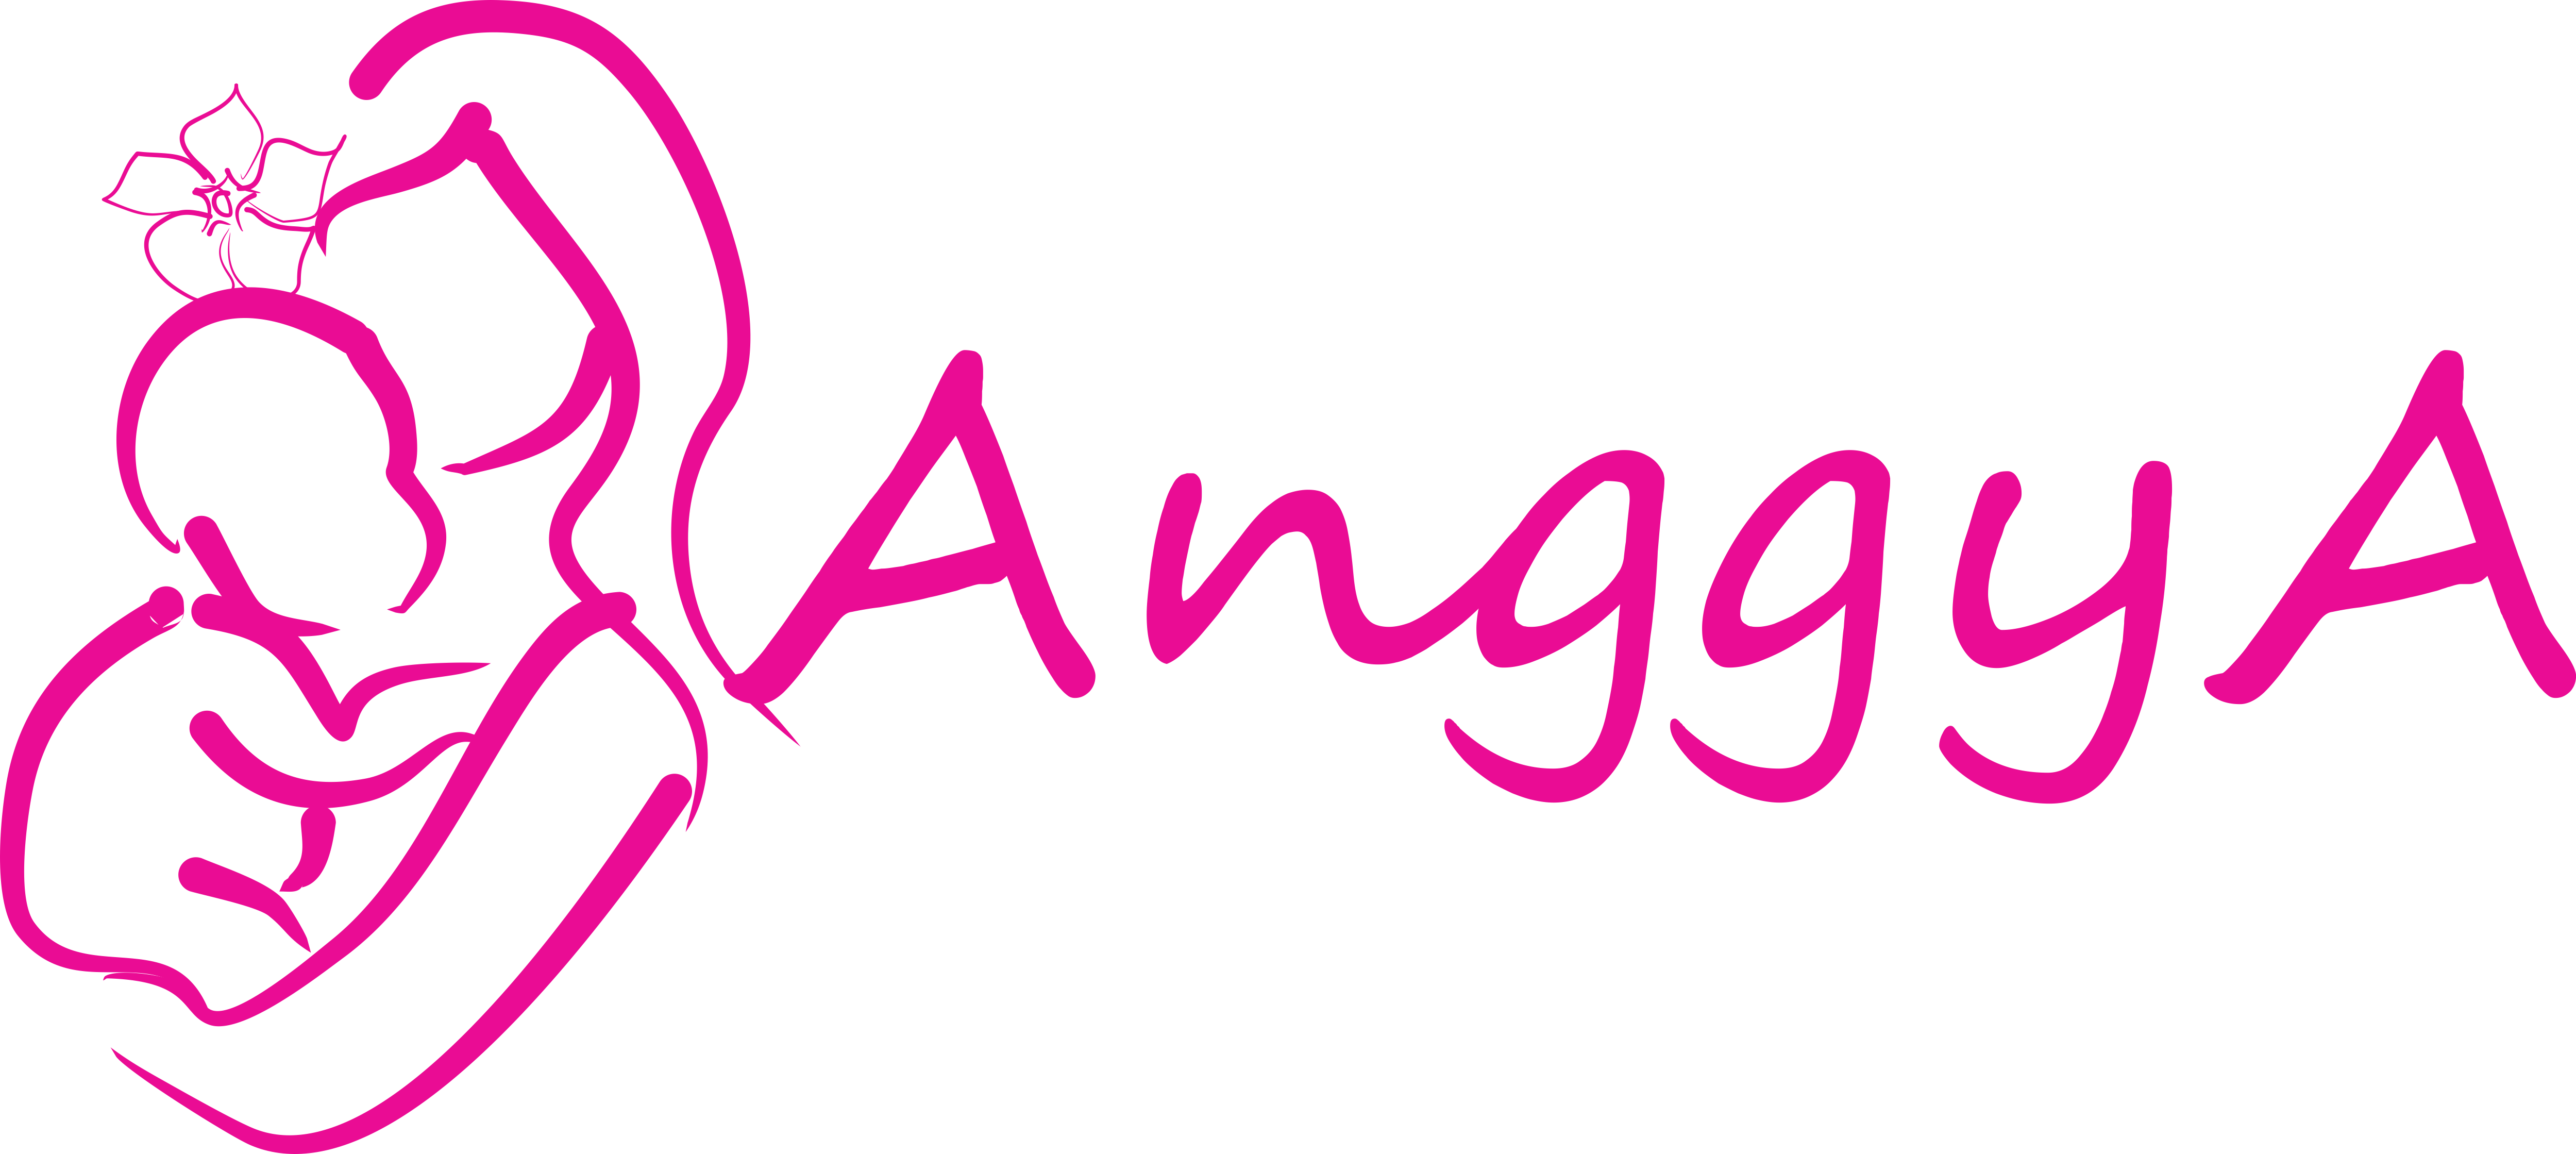 Pink Singer Logo - Pink Singer Logo Transparent